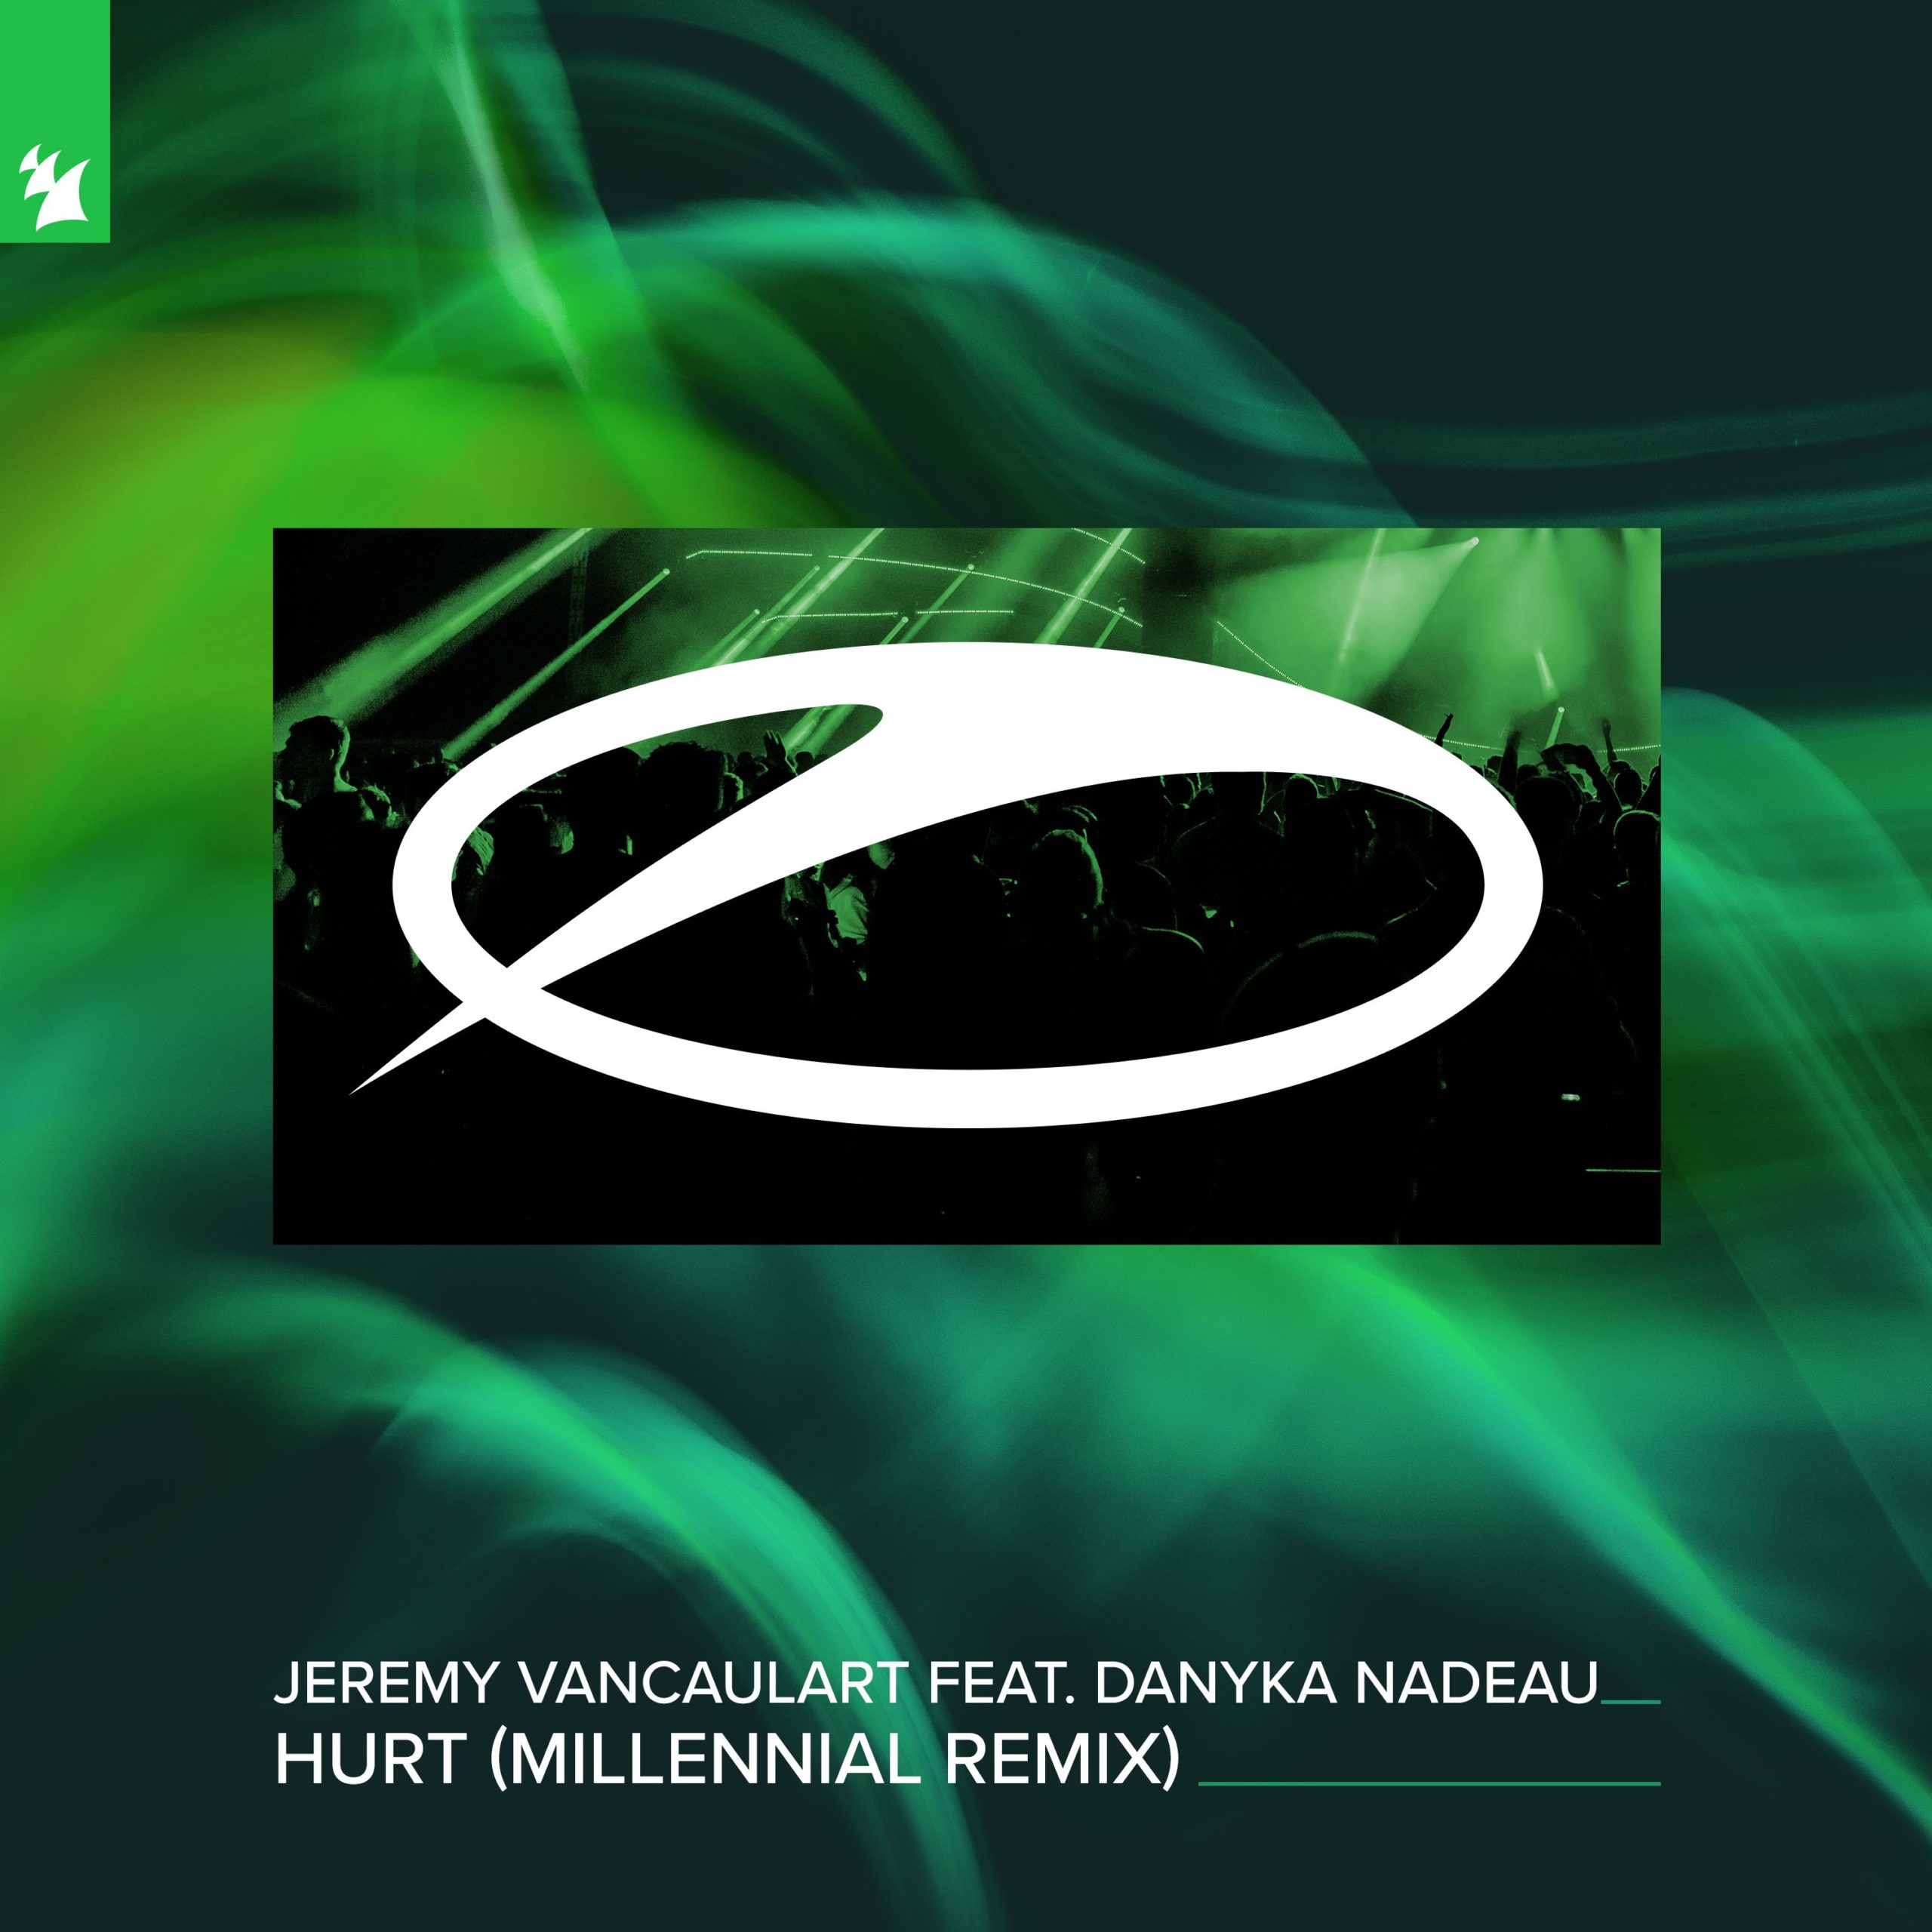 Jeremy Vancaulart feat. Danyka Nadeau presents Hurt (Millennial Remix) on A State Of Trance